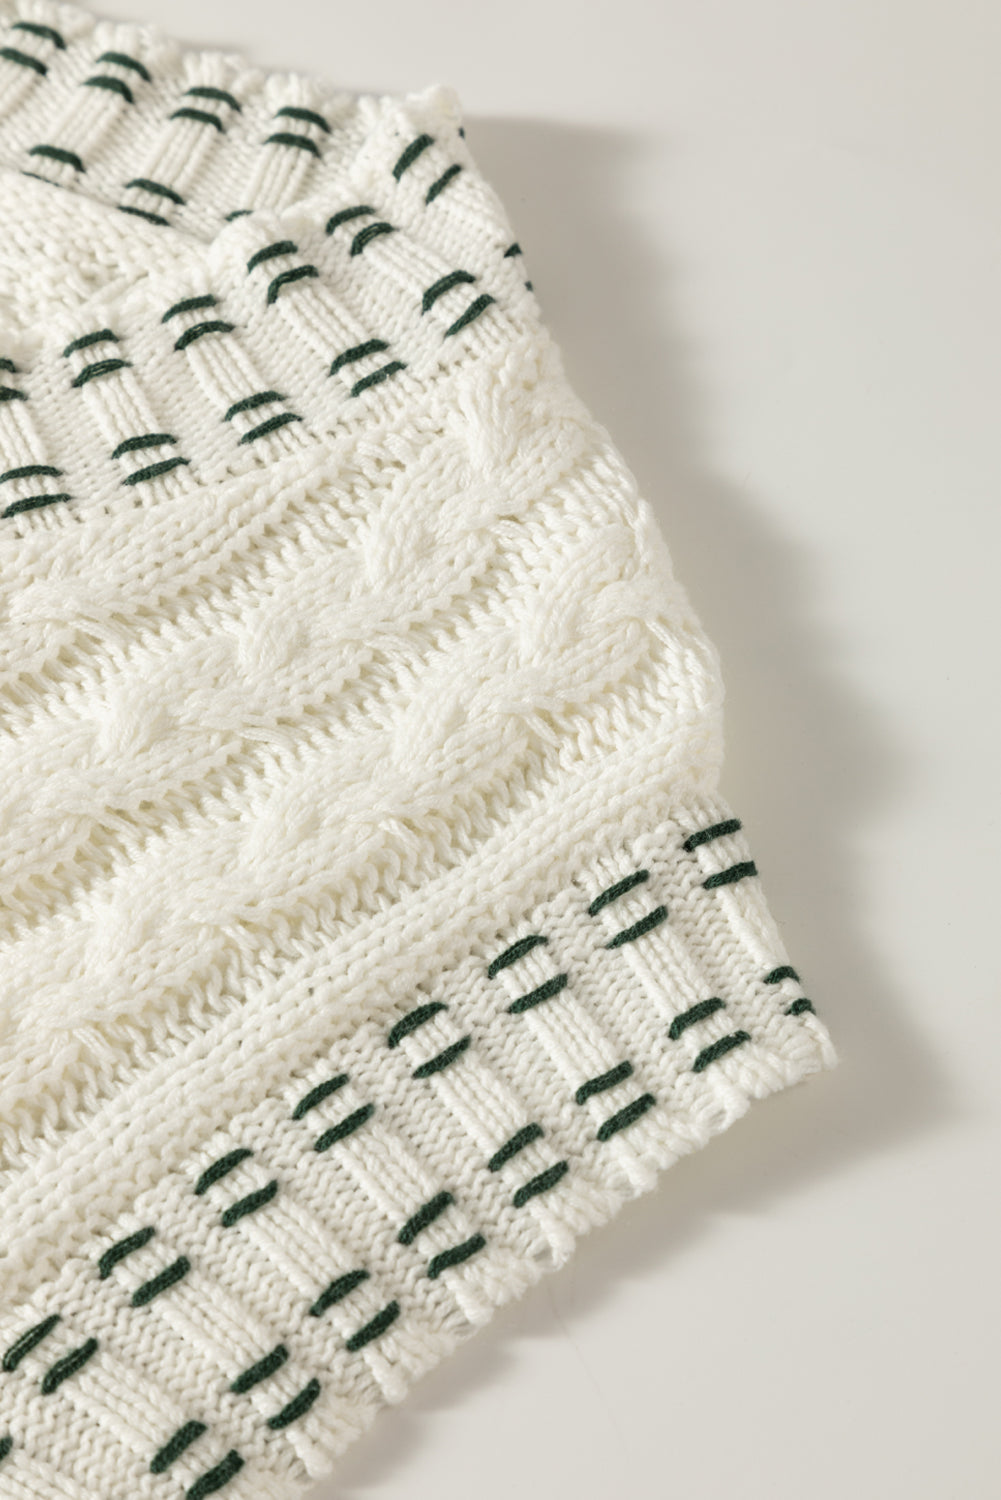 White Contrast Trim V Neck Cable Knit Sweater Vest